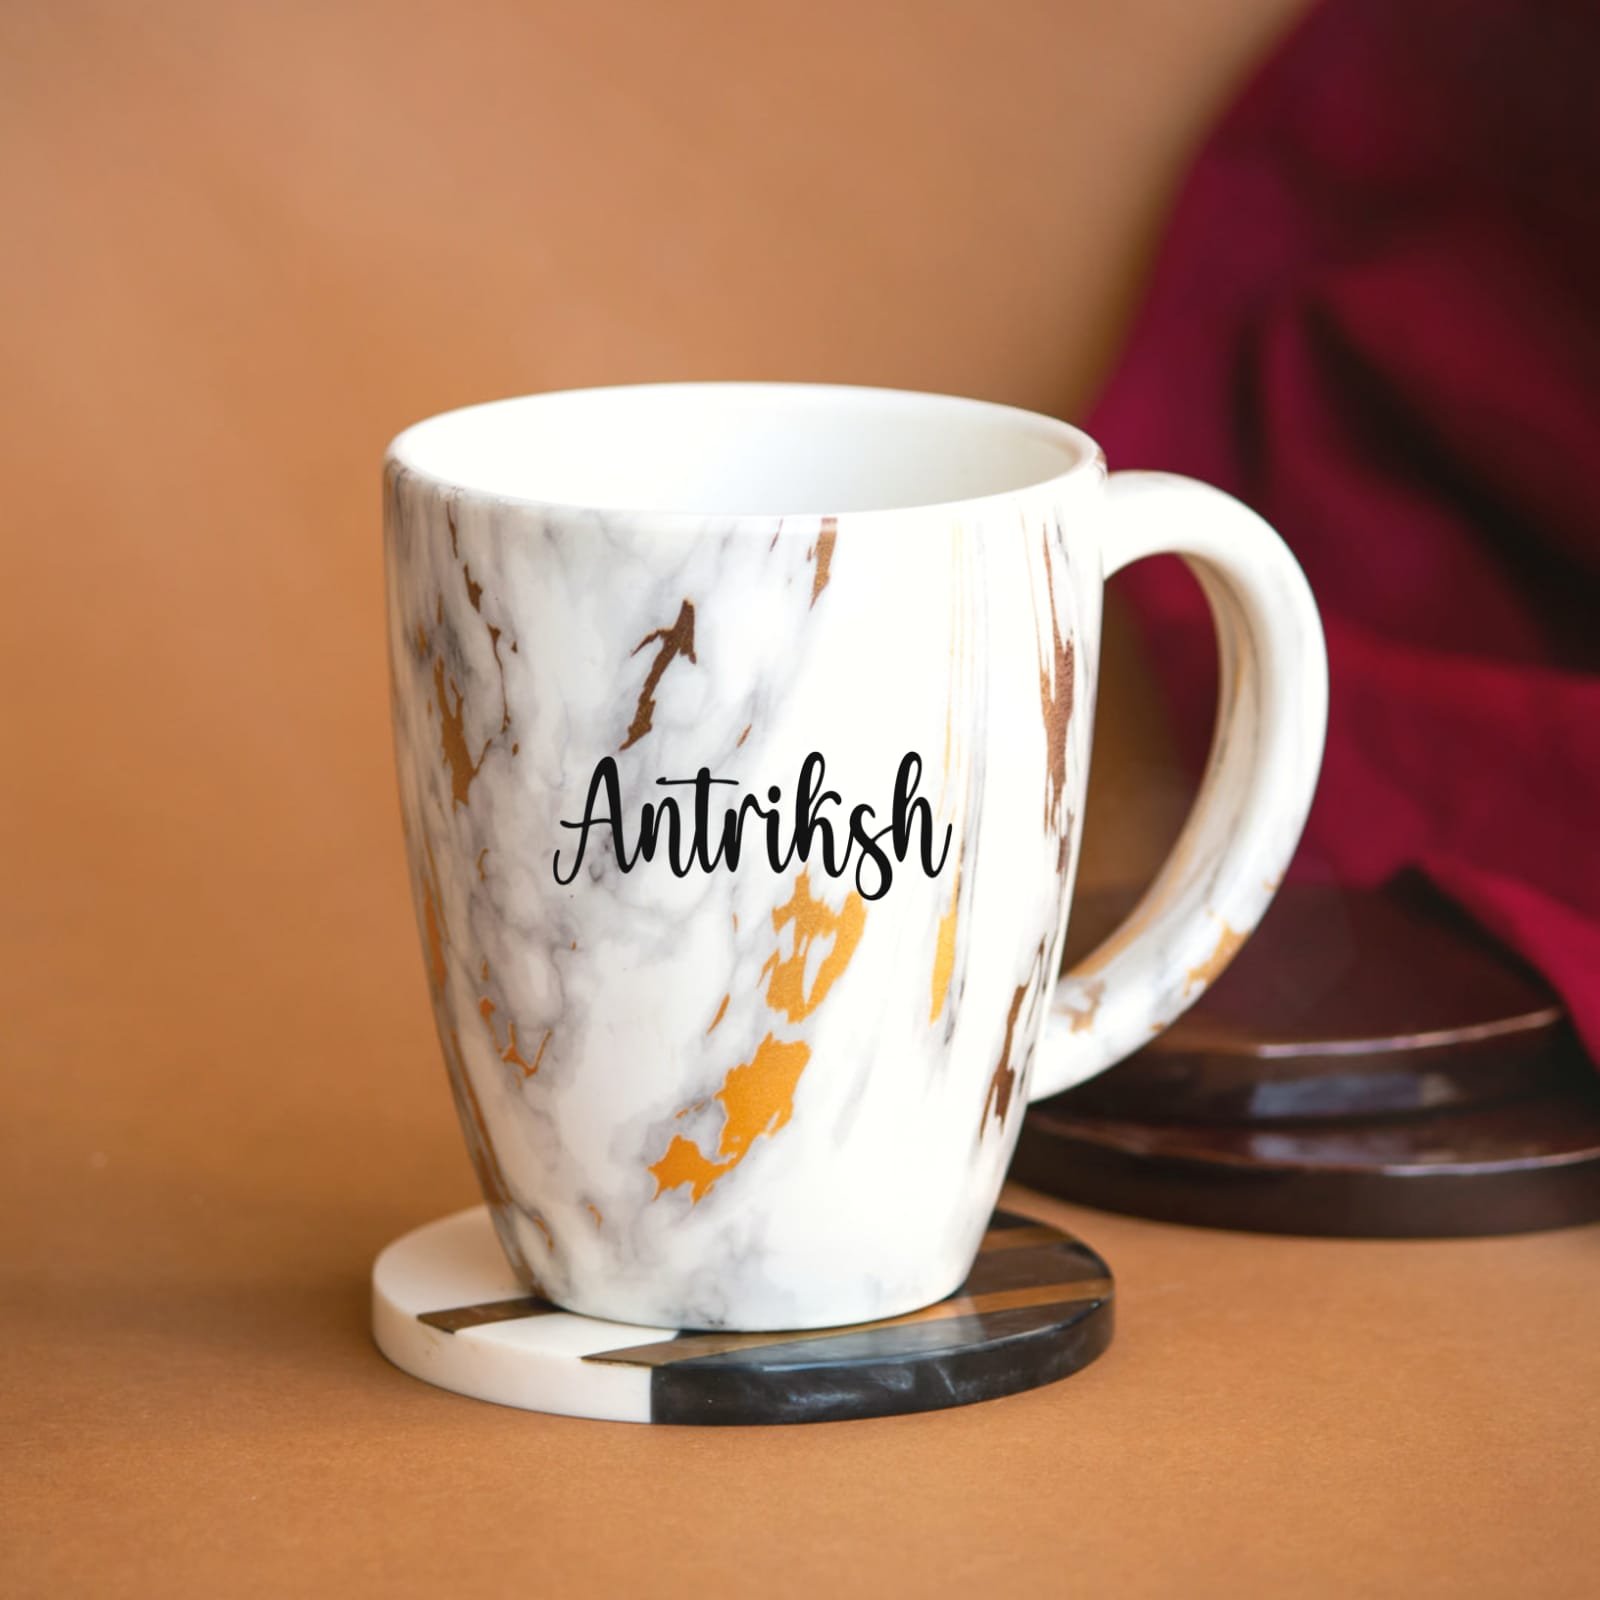 Premium Bistro Mug - Personalized Mug - Unbreakable Mug With Name -  Personalized Coffee Mug